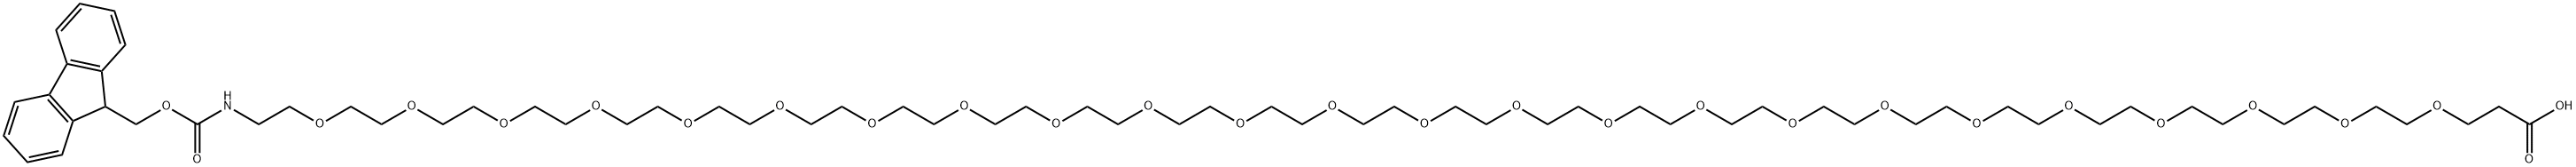 Fmoc-N-amido-PEG24-acid